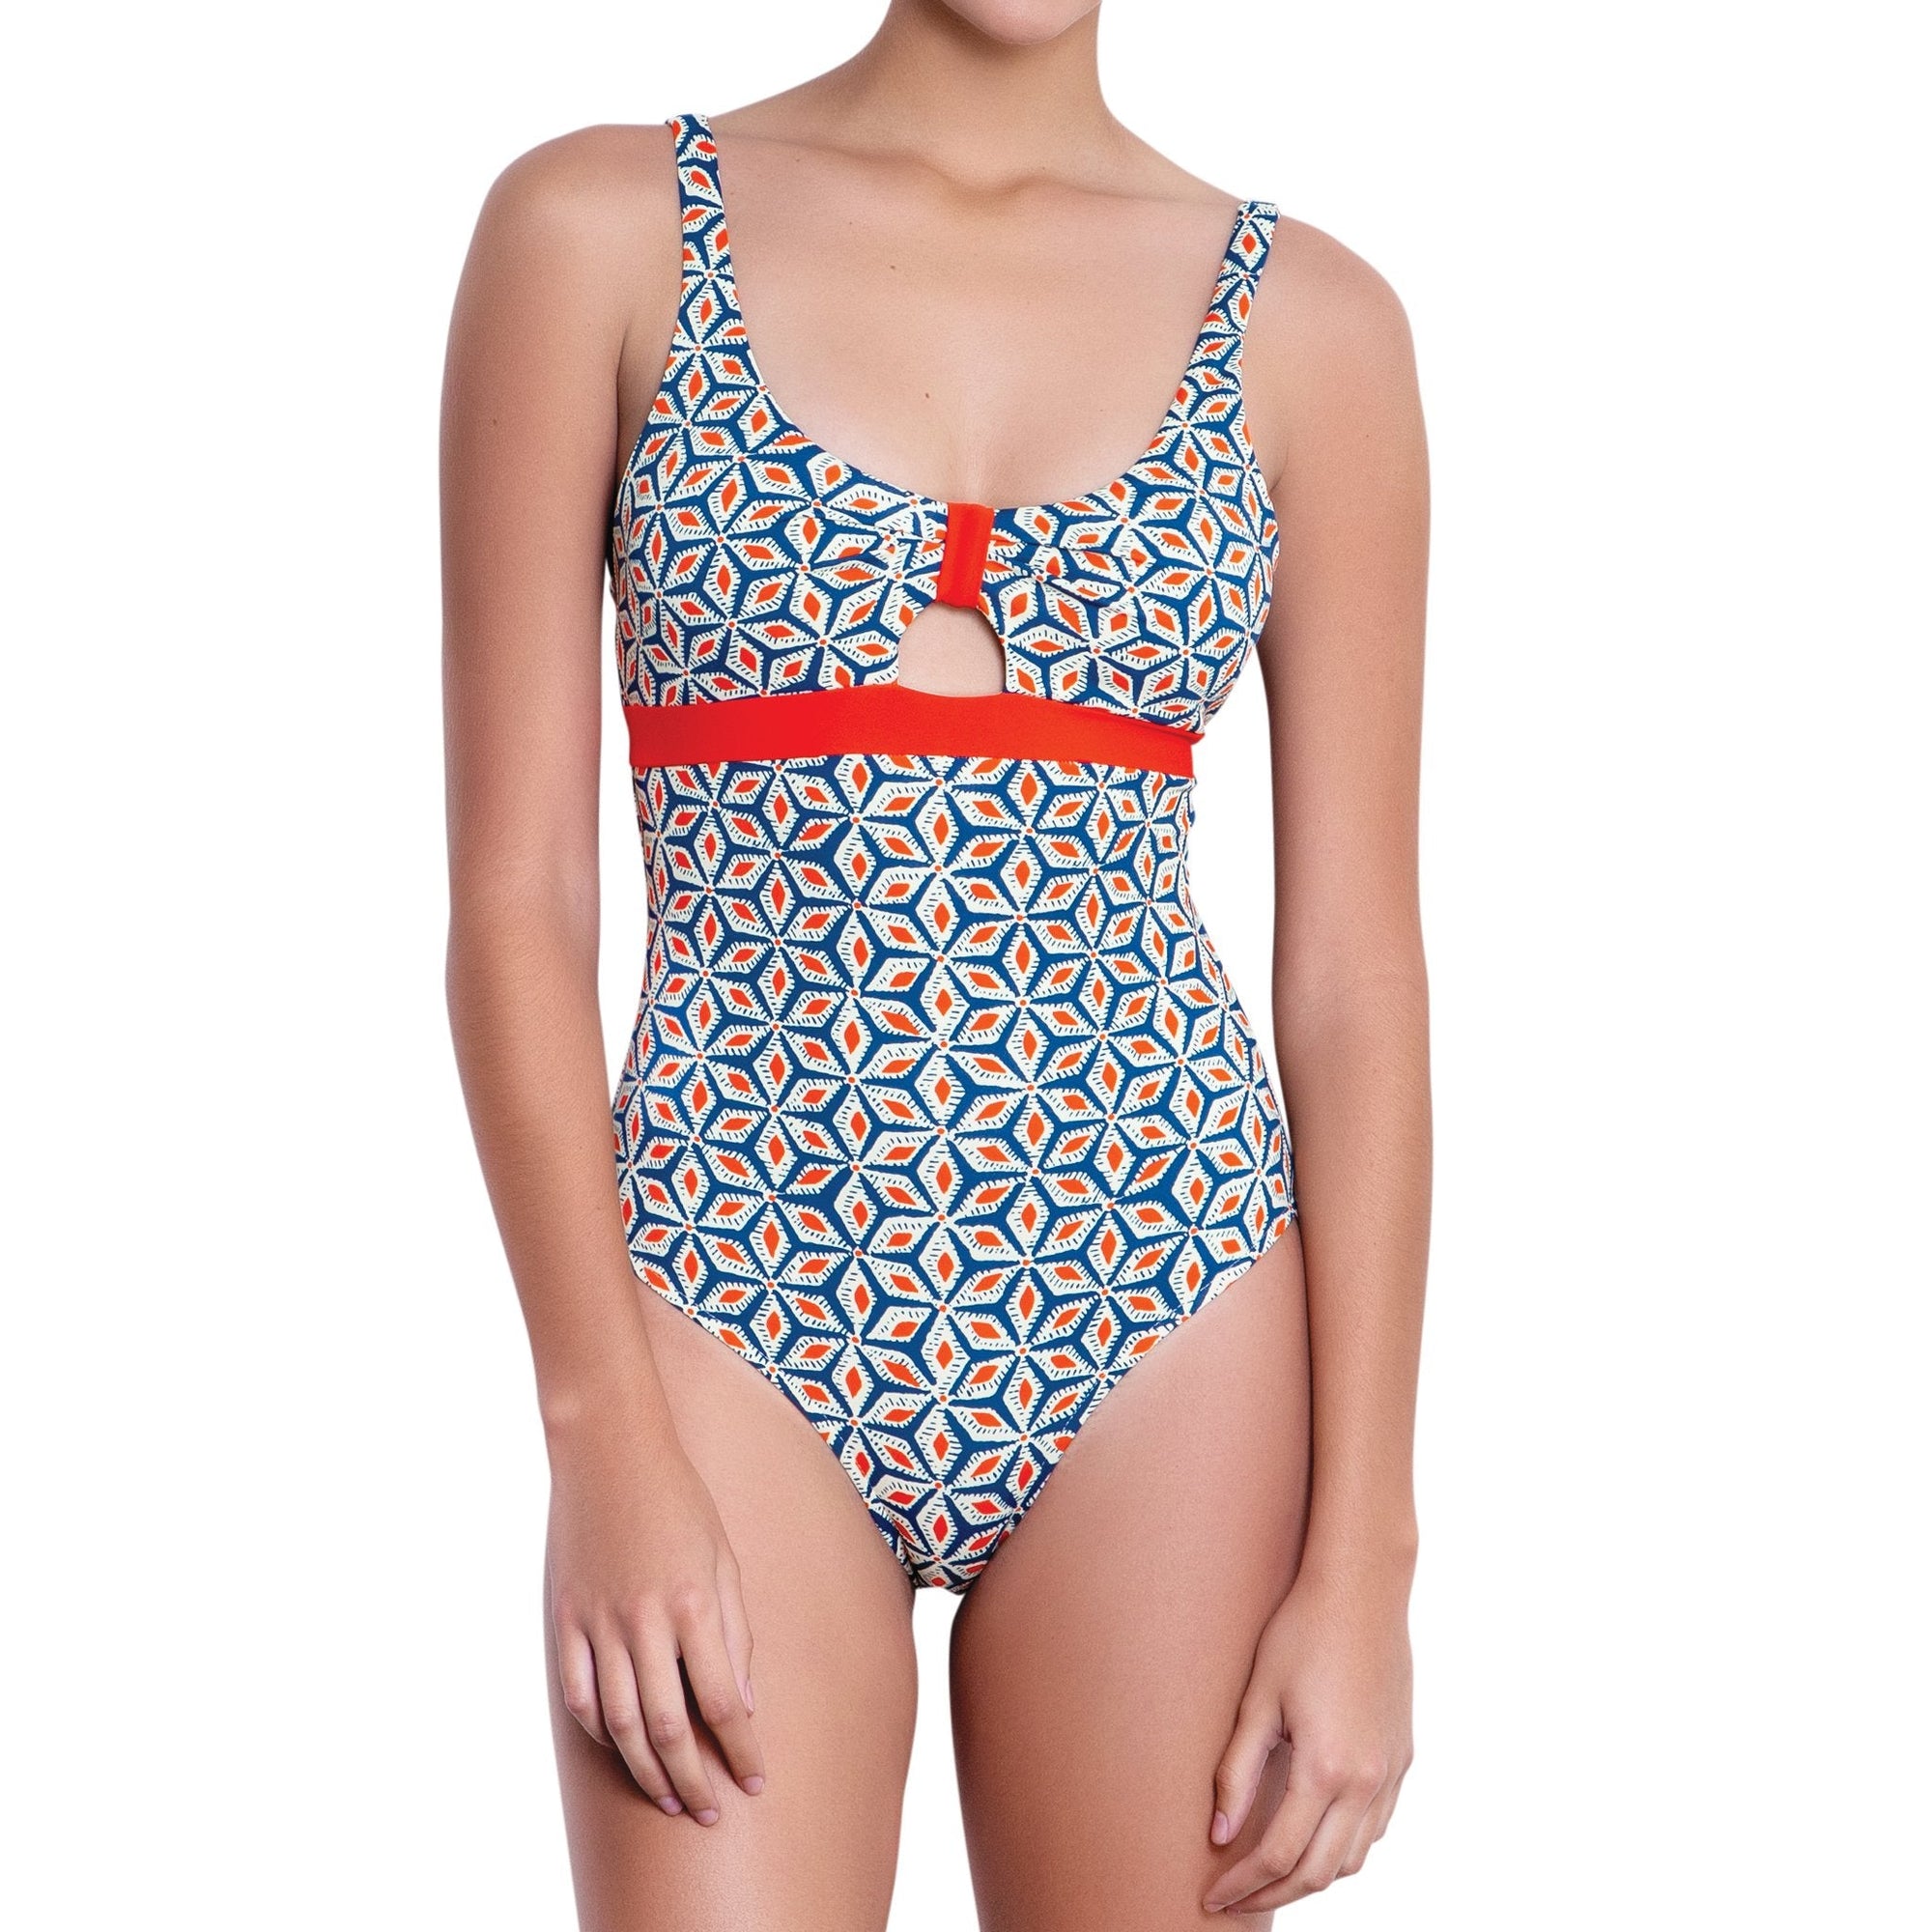 B√âR√âNICE halter one piece, printed swimsuit by ALMA swimwear ‚Äì front view 1